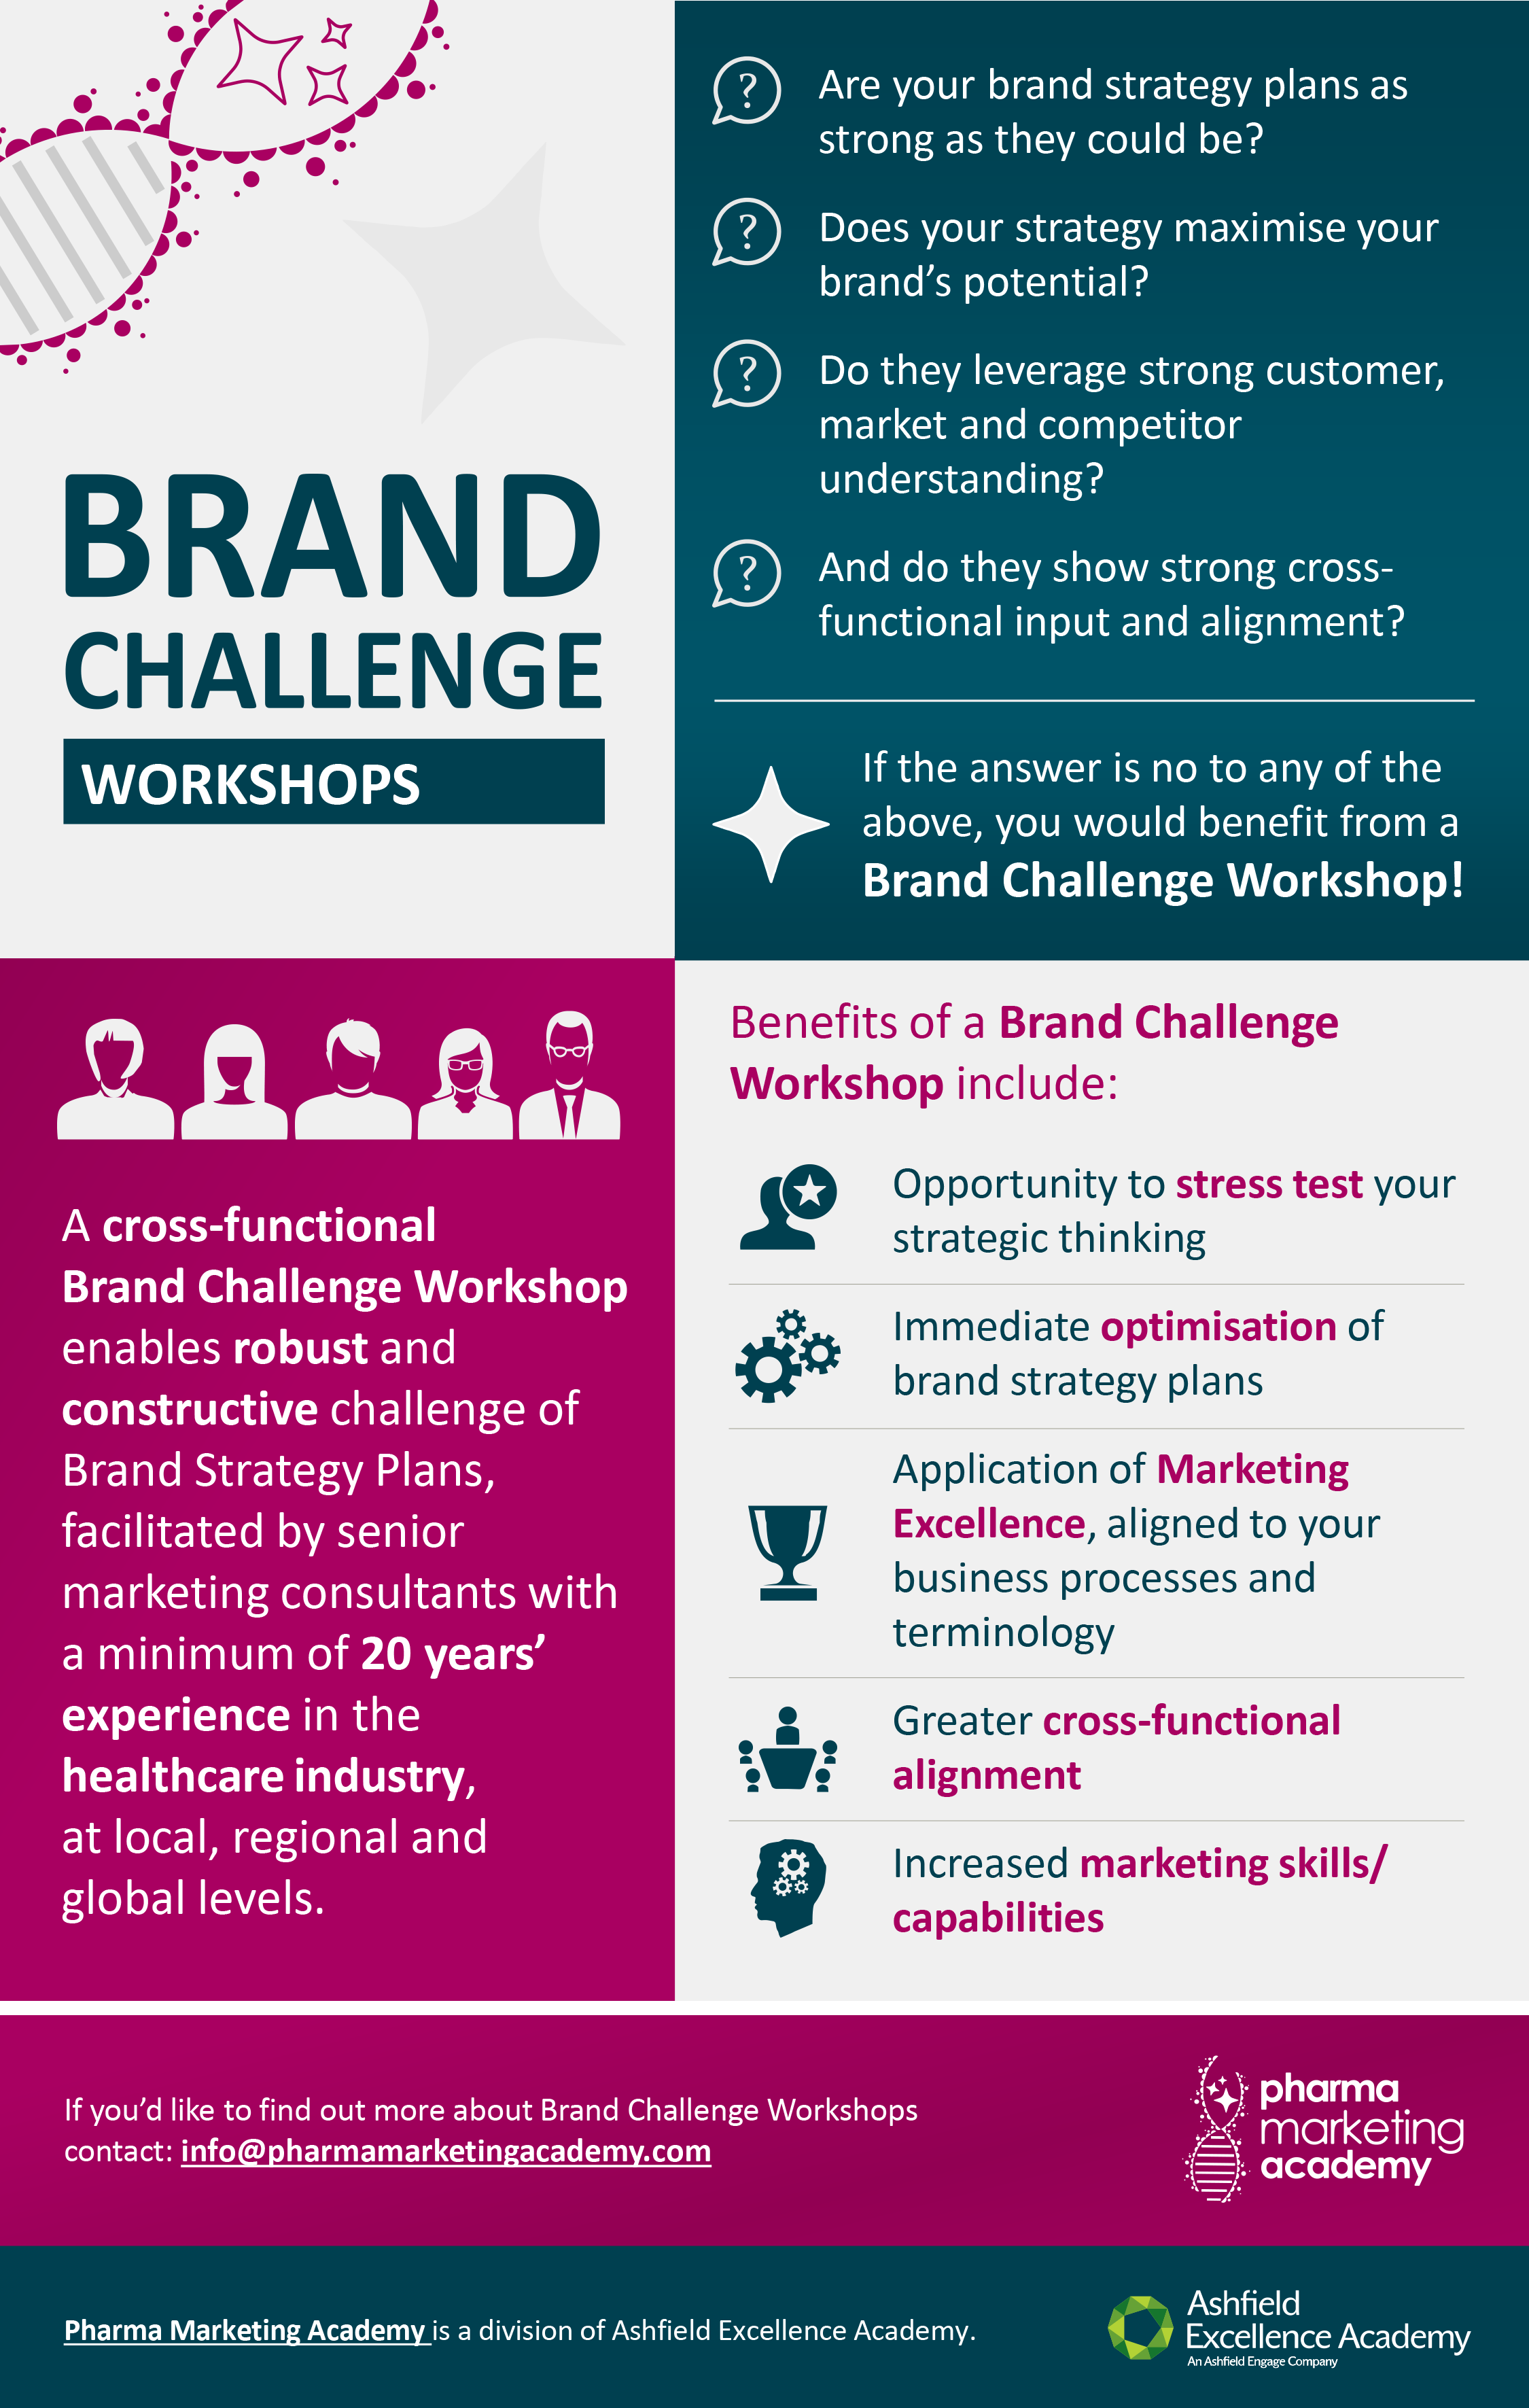 Brand Challenge Workshops